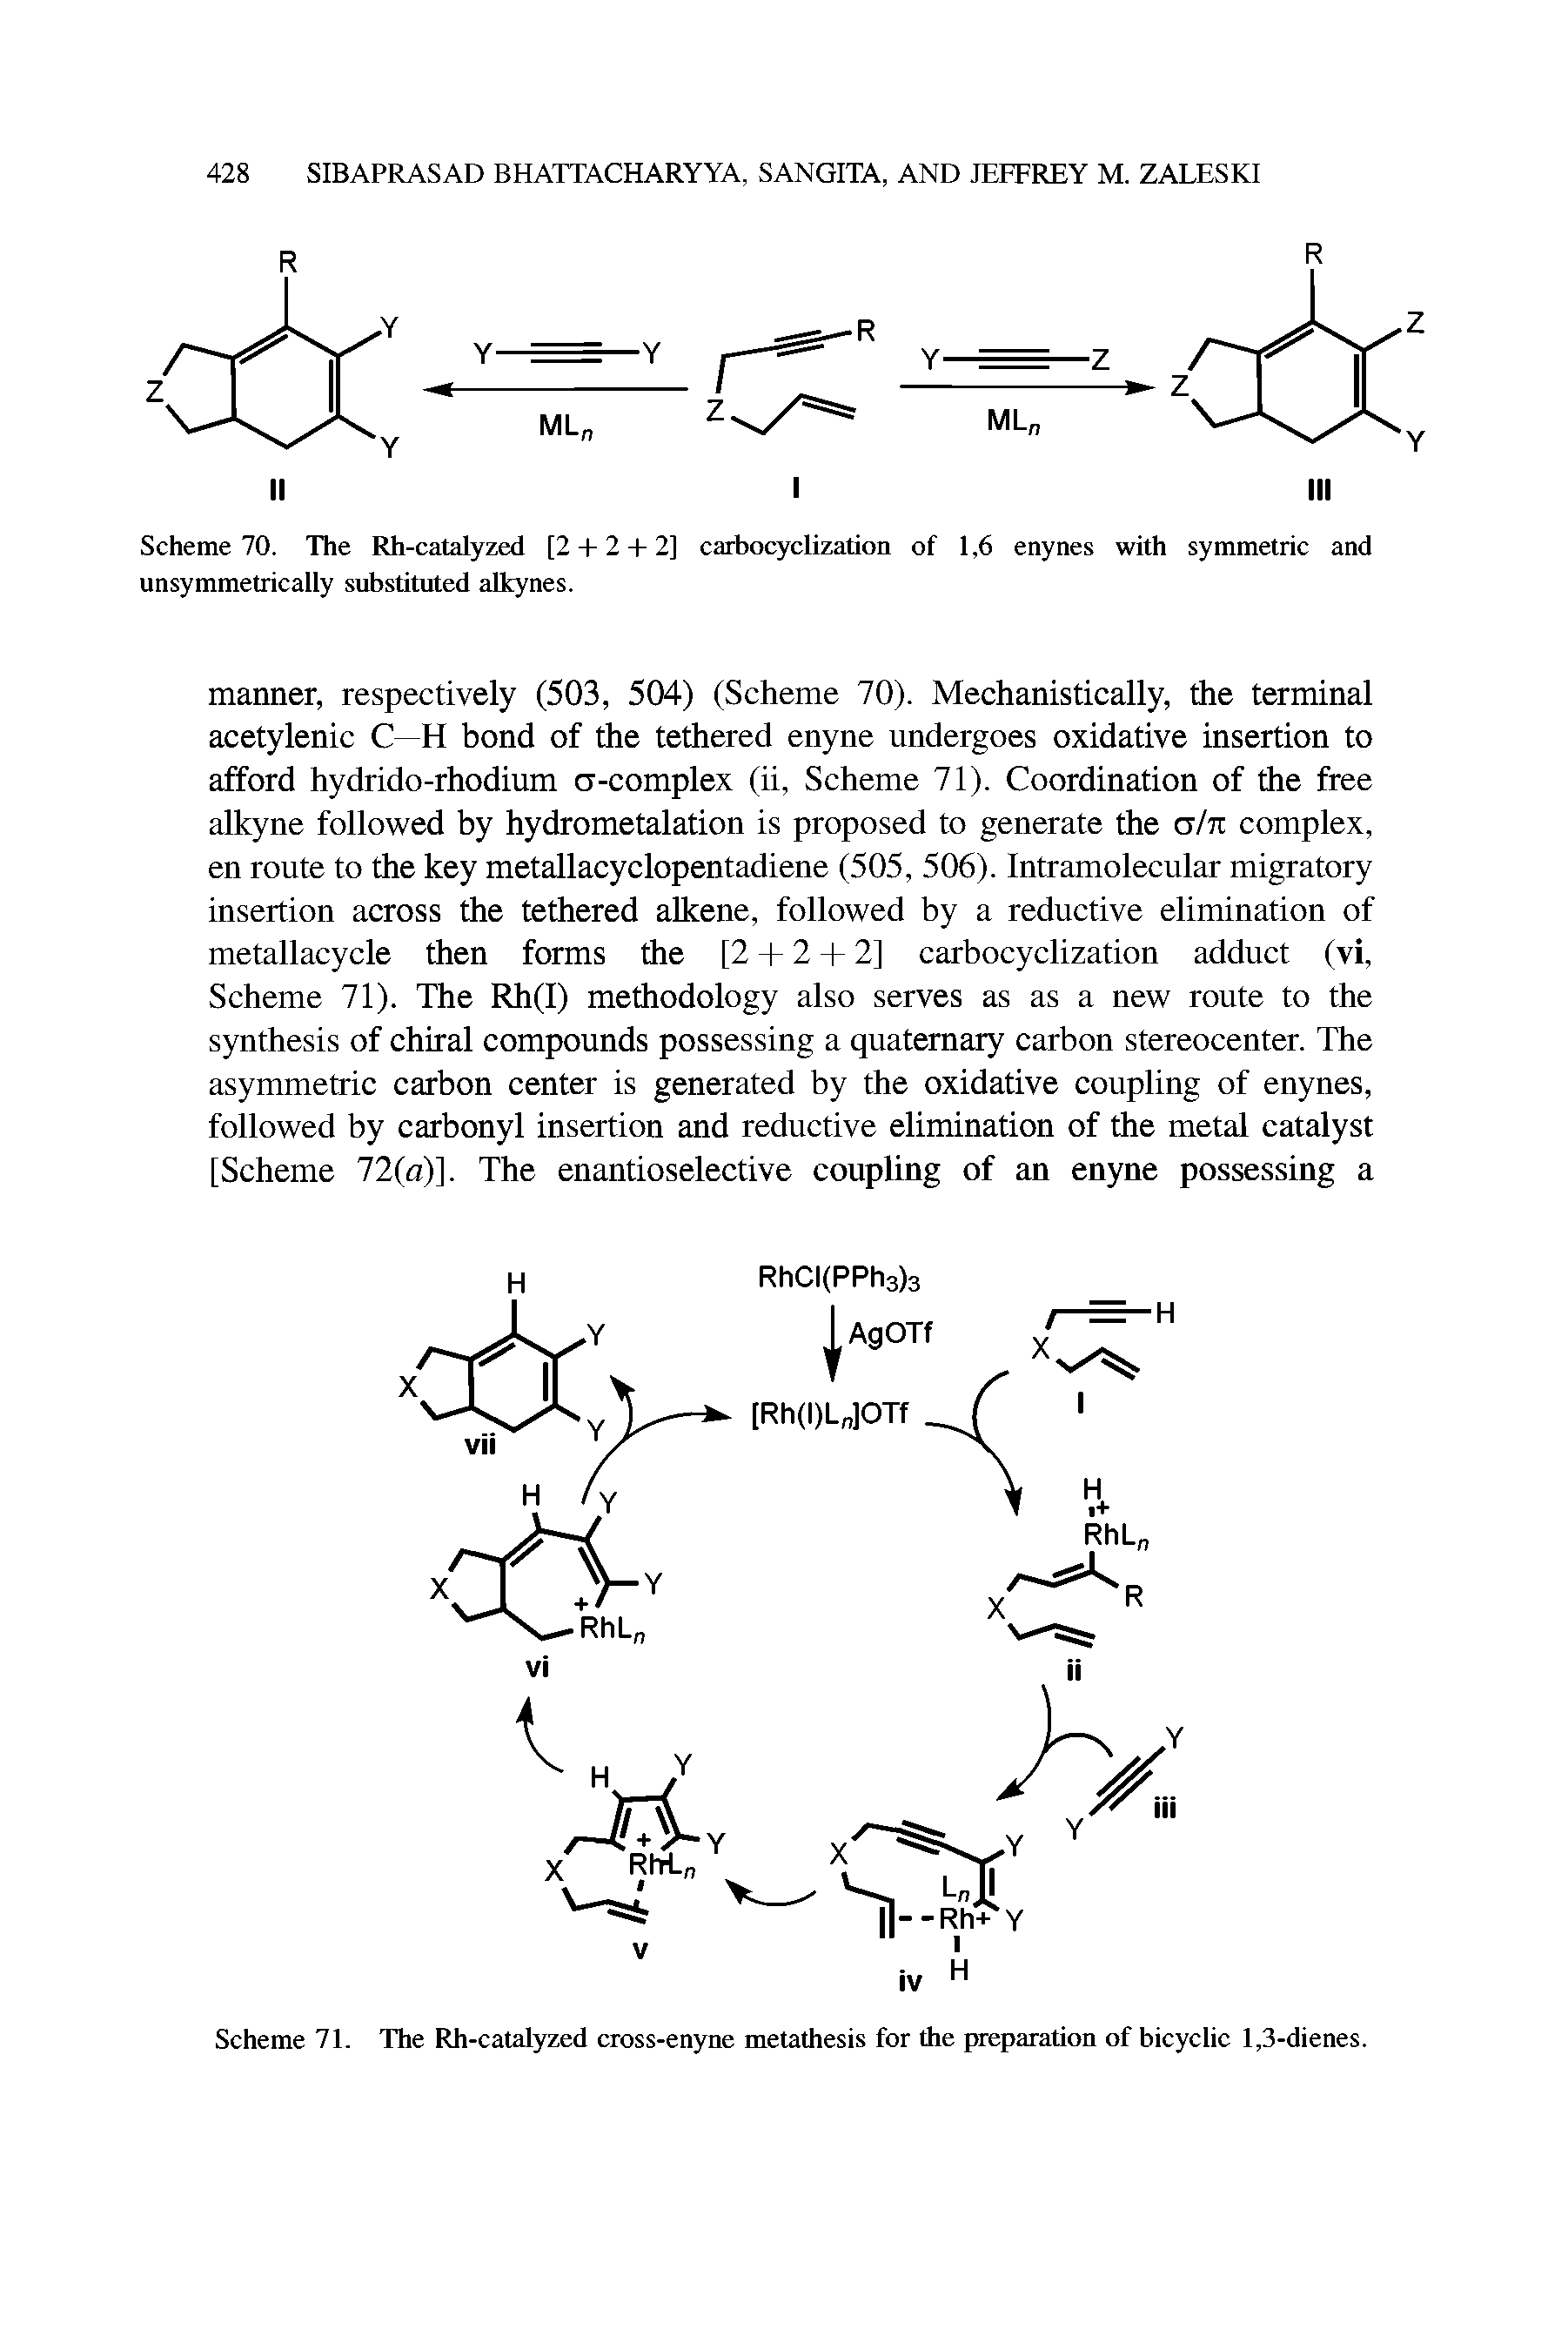 Scheme 71. The Rh-catalyzed cross-enyne metathesis for the preparation of bicyclic 1,3-dienes.